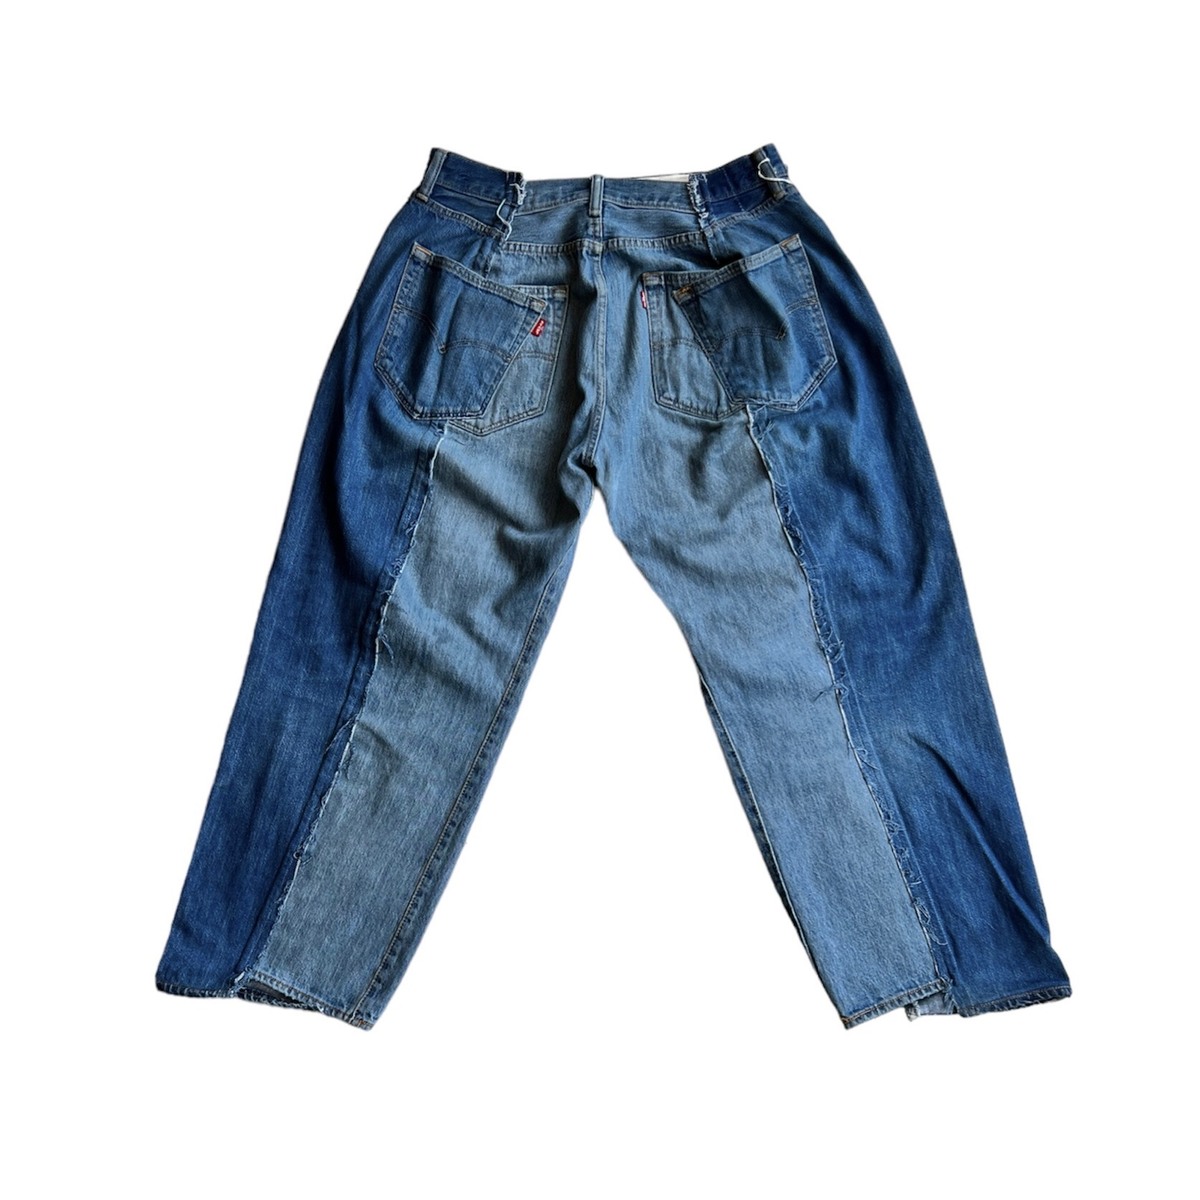 OLDPARK baggy jeans blue-L - フリーストレイン のアイテム ...